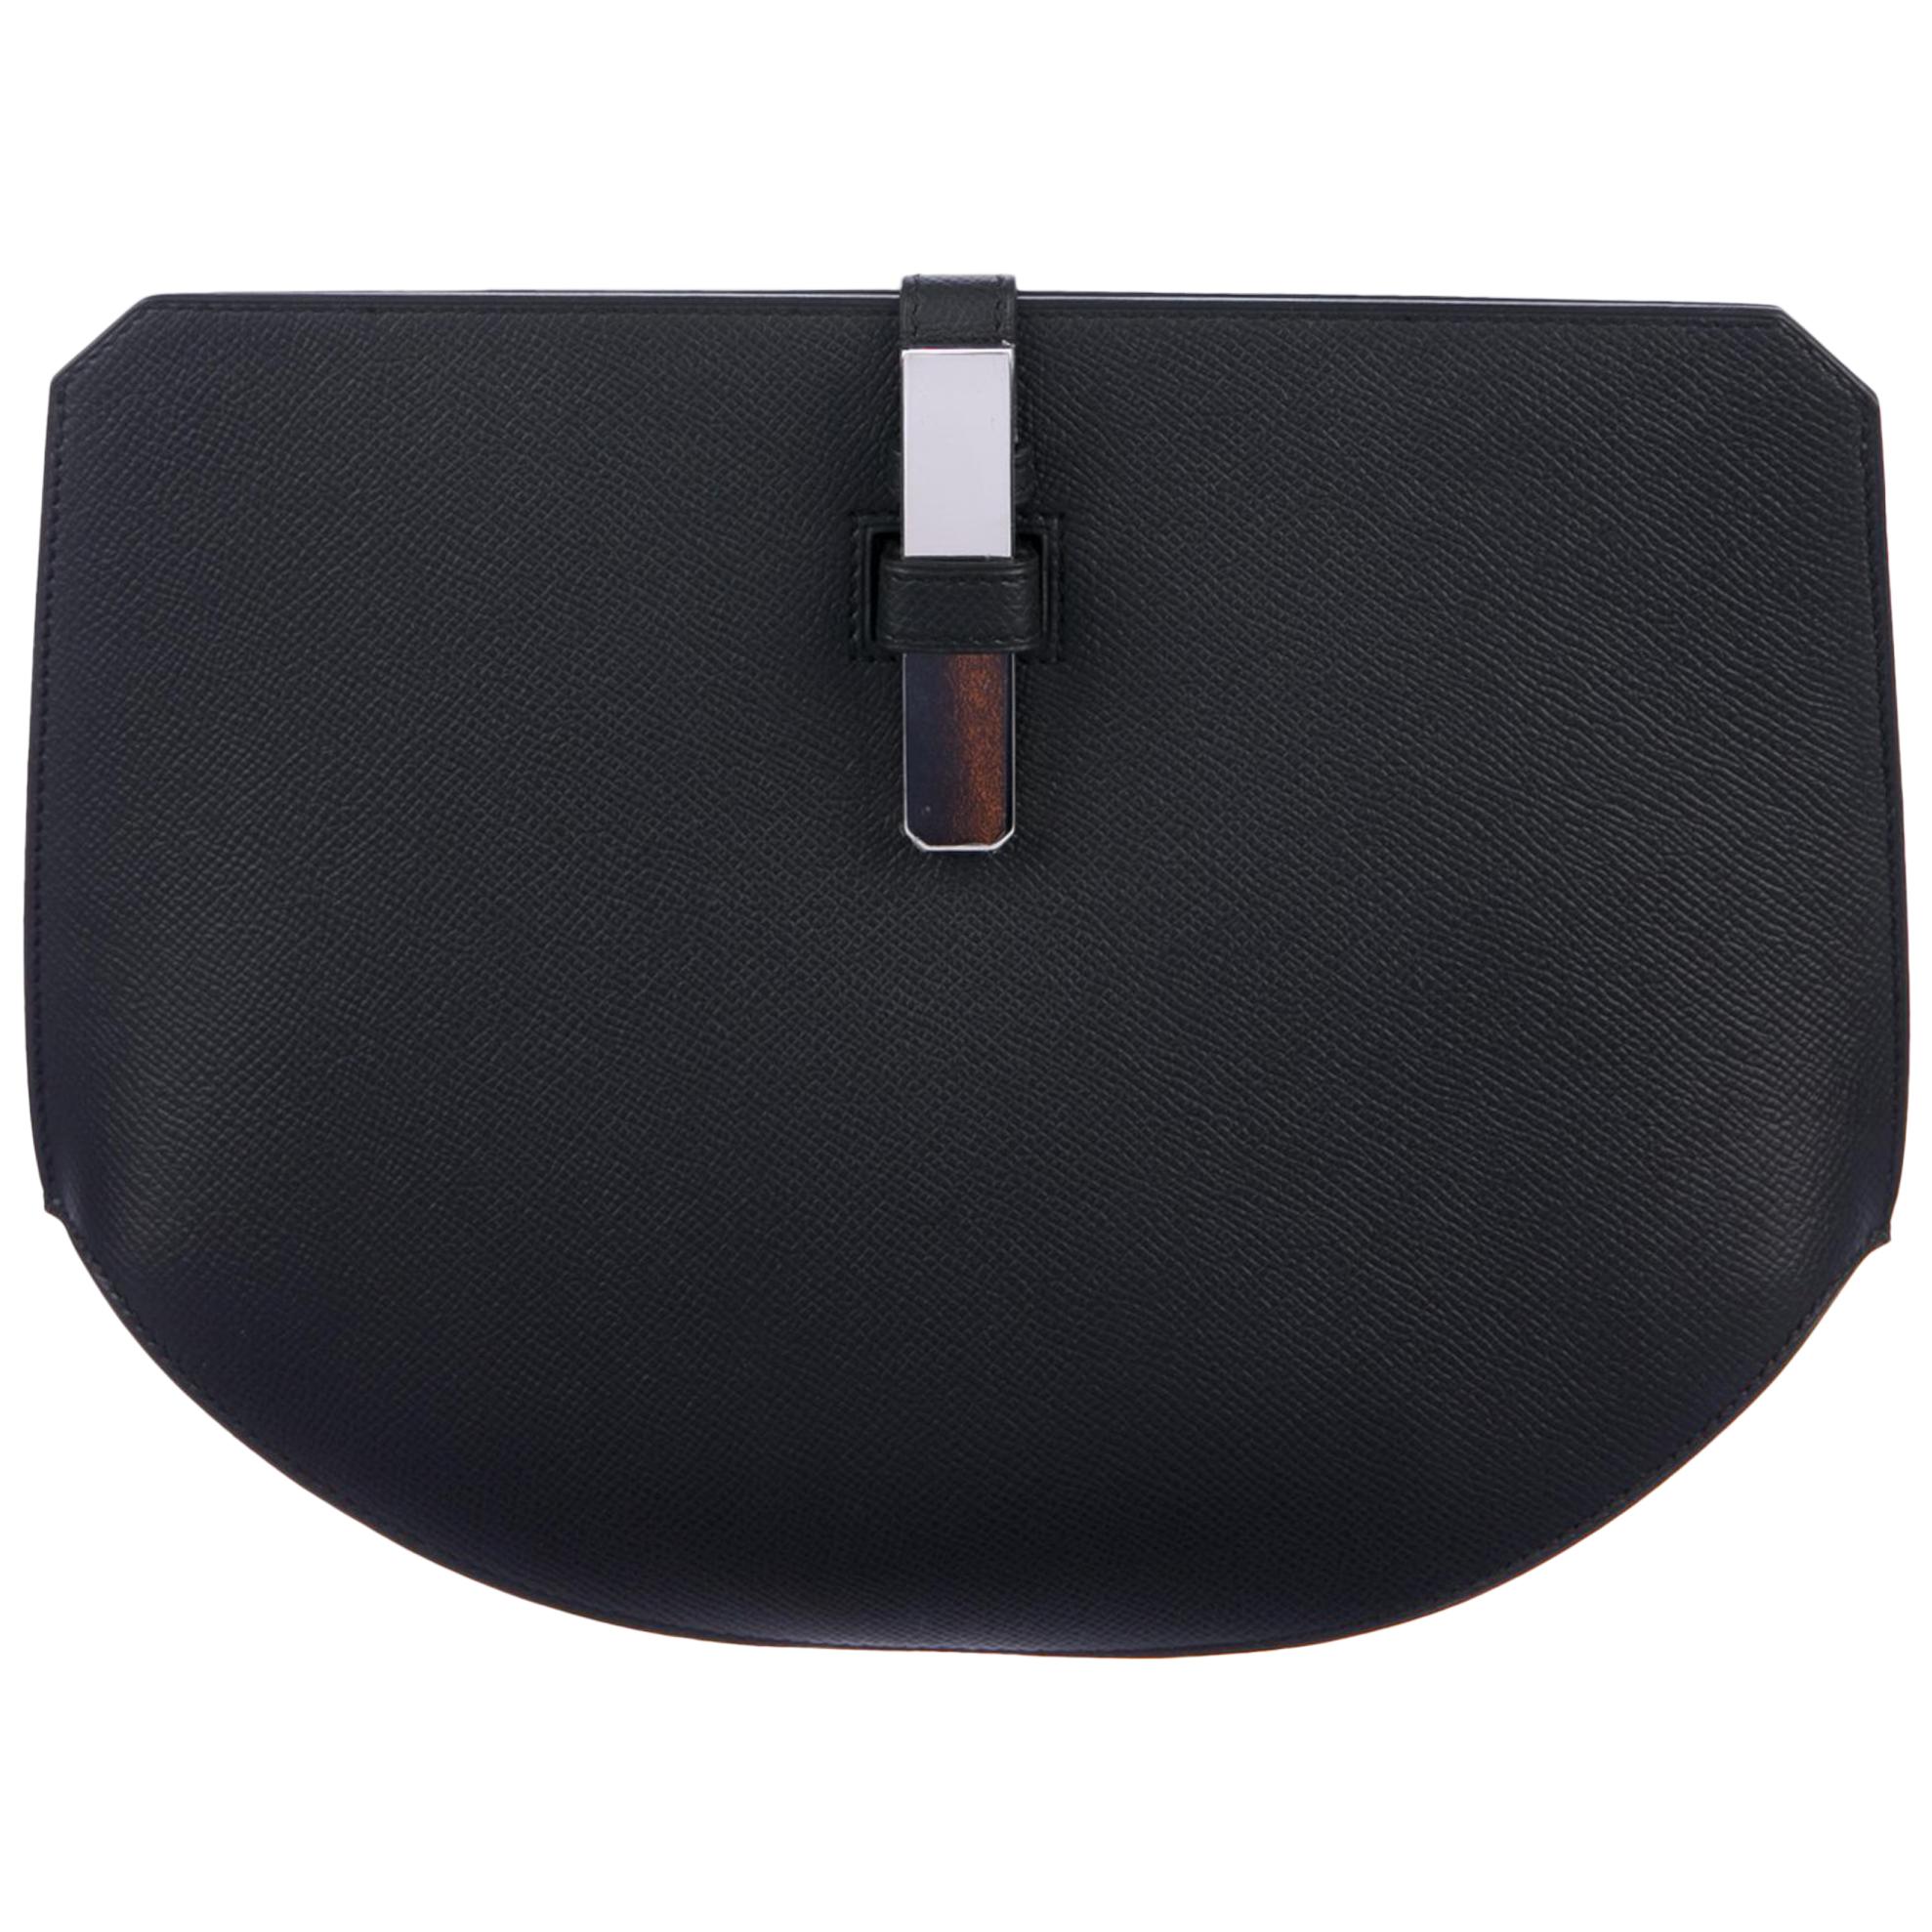 Hermes Black Leather Palladium Slip Half Moon Evening Clutch Bag